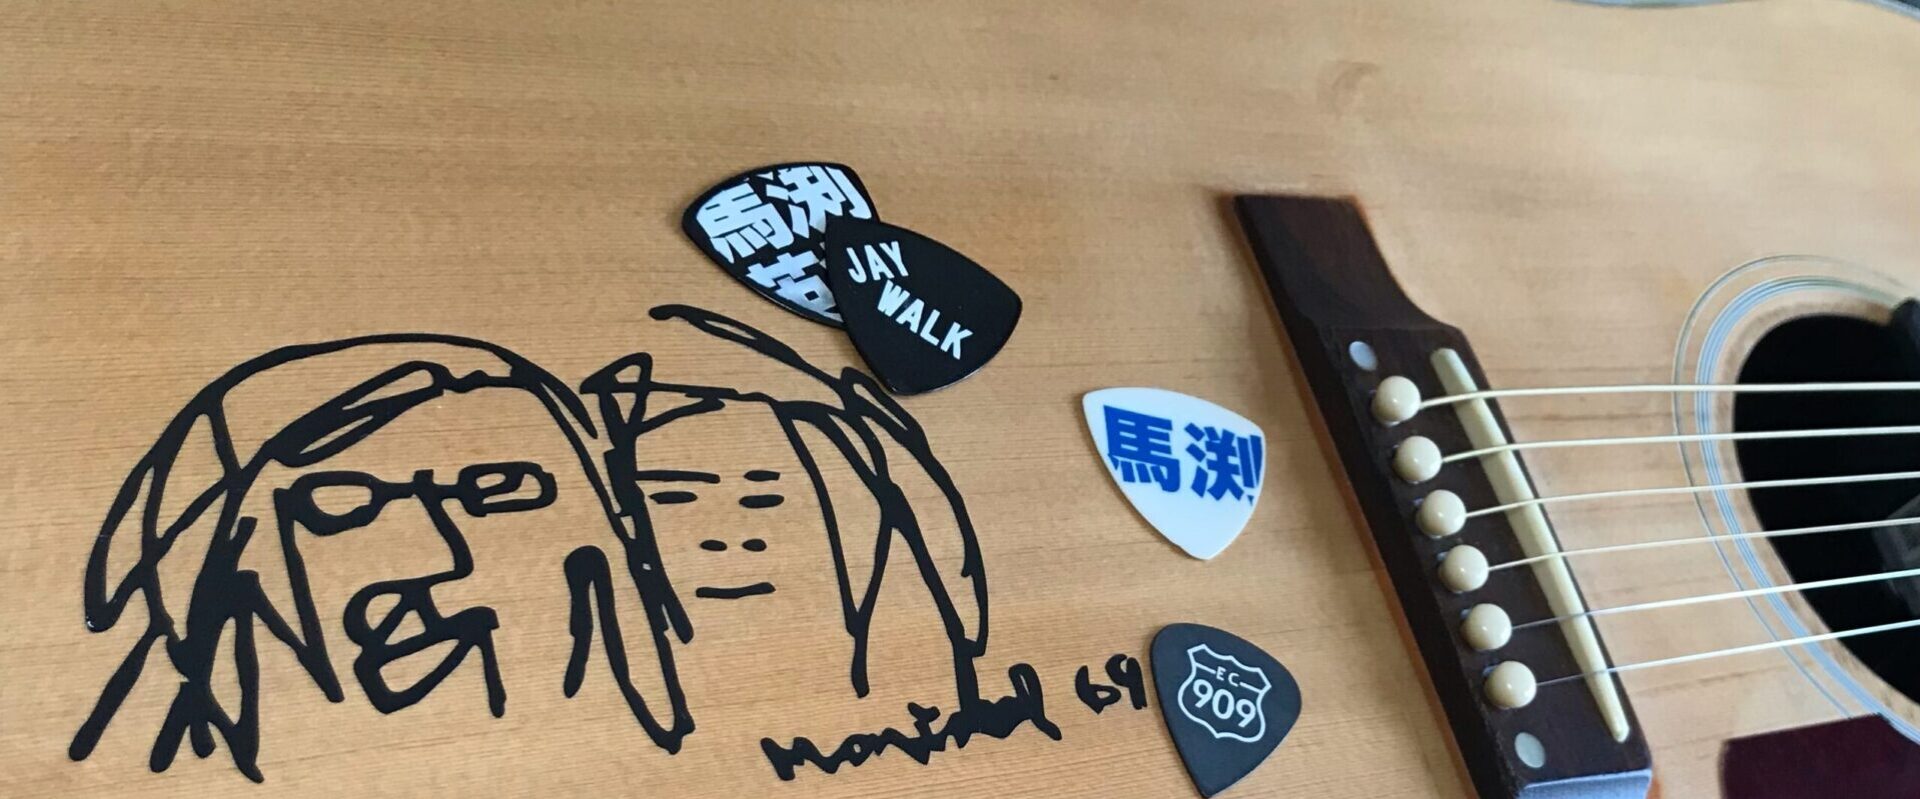 John Mayer’s autograph♪♪♪